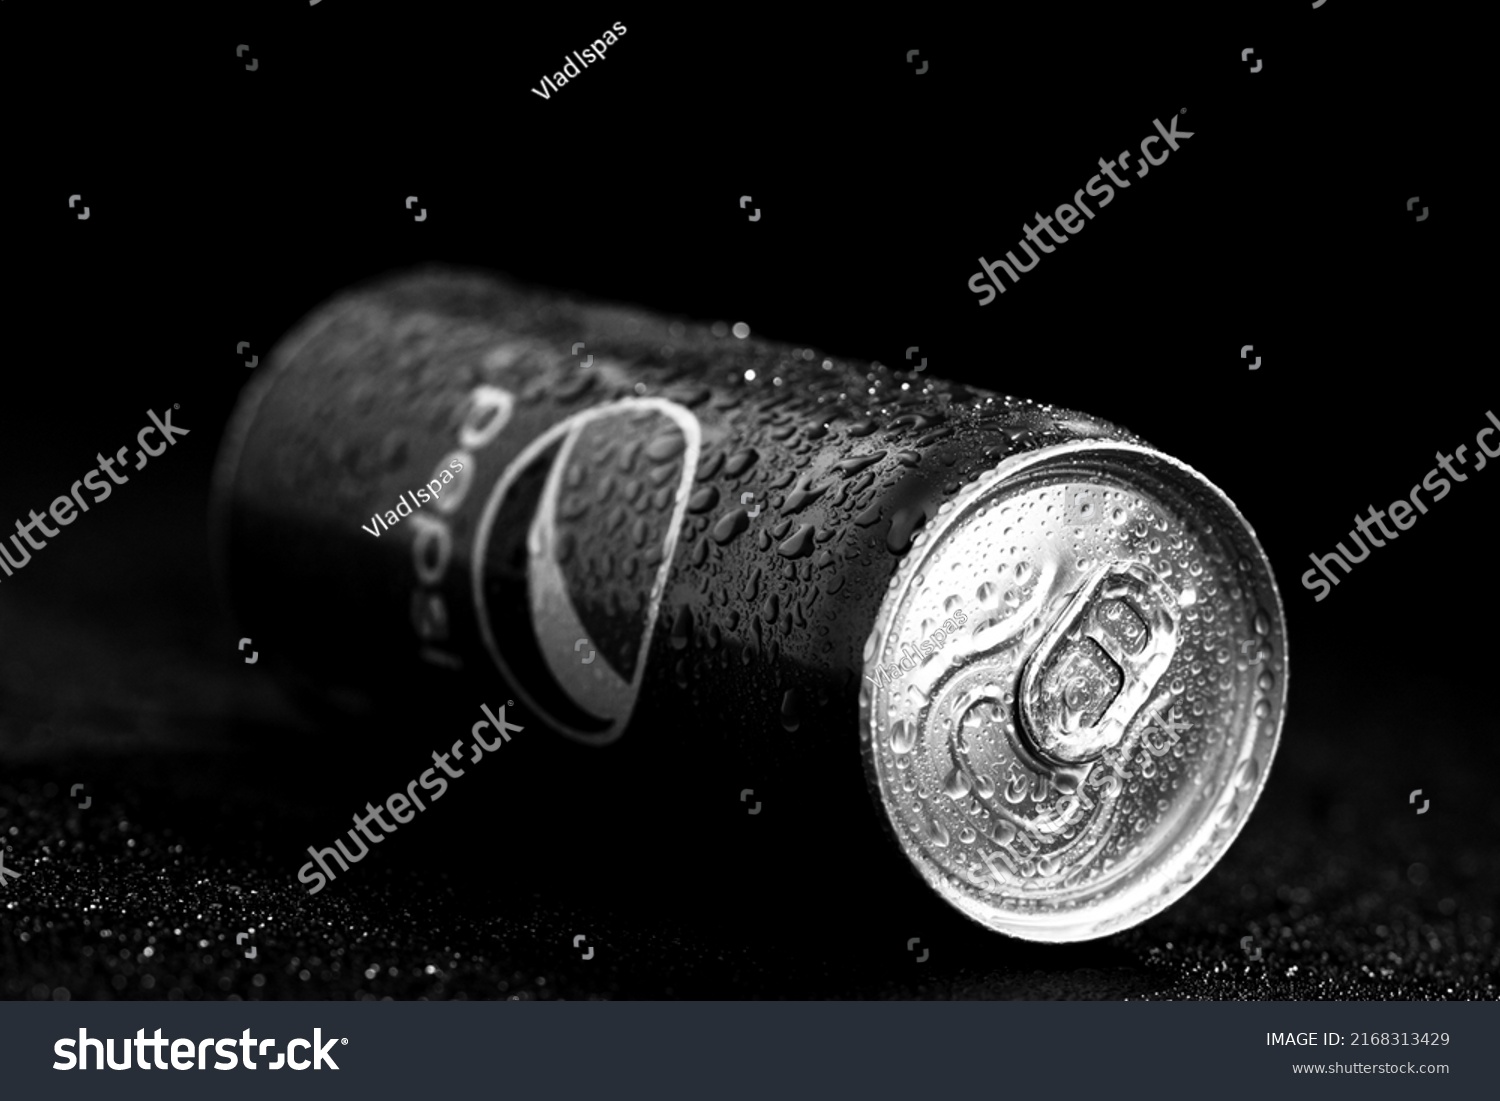 Classic Pepsi Can Pepsi Soft Drink Stock Photo 2168313429 | Shutterstock